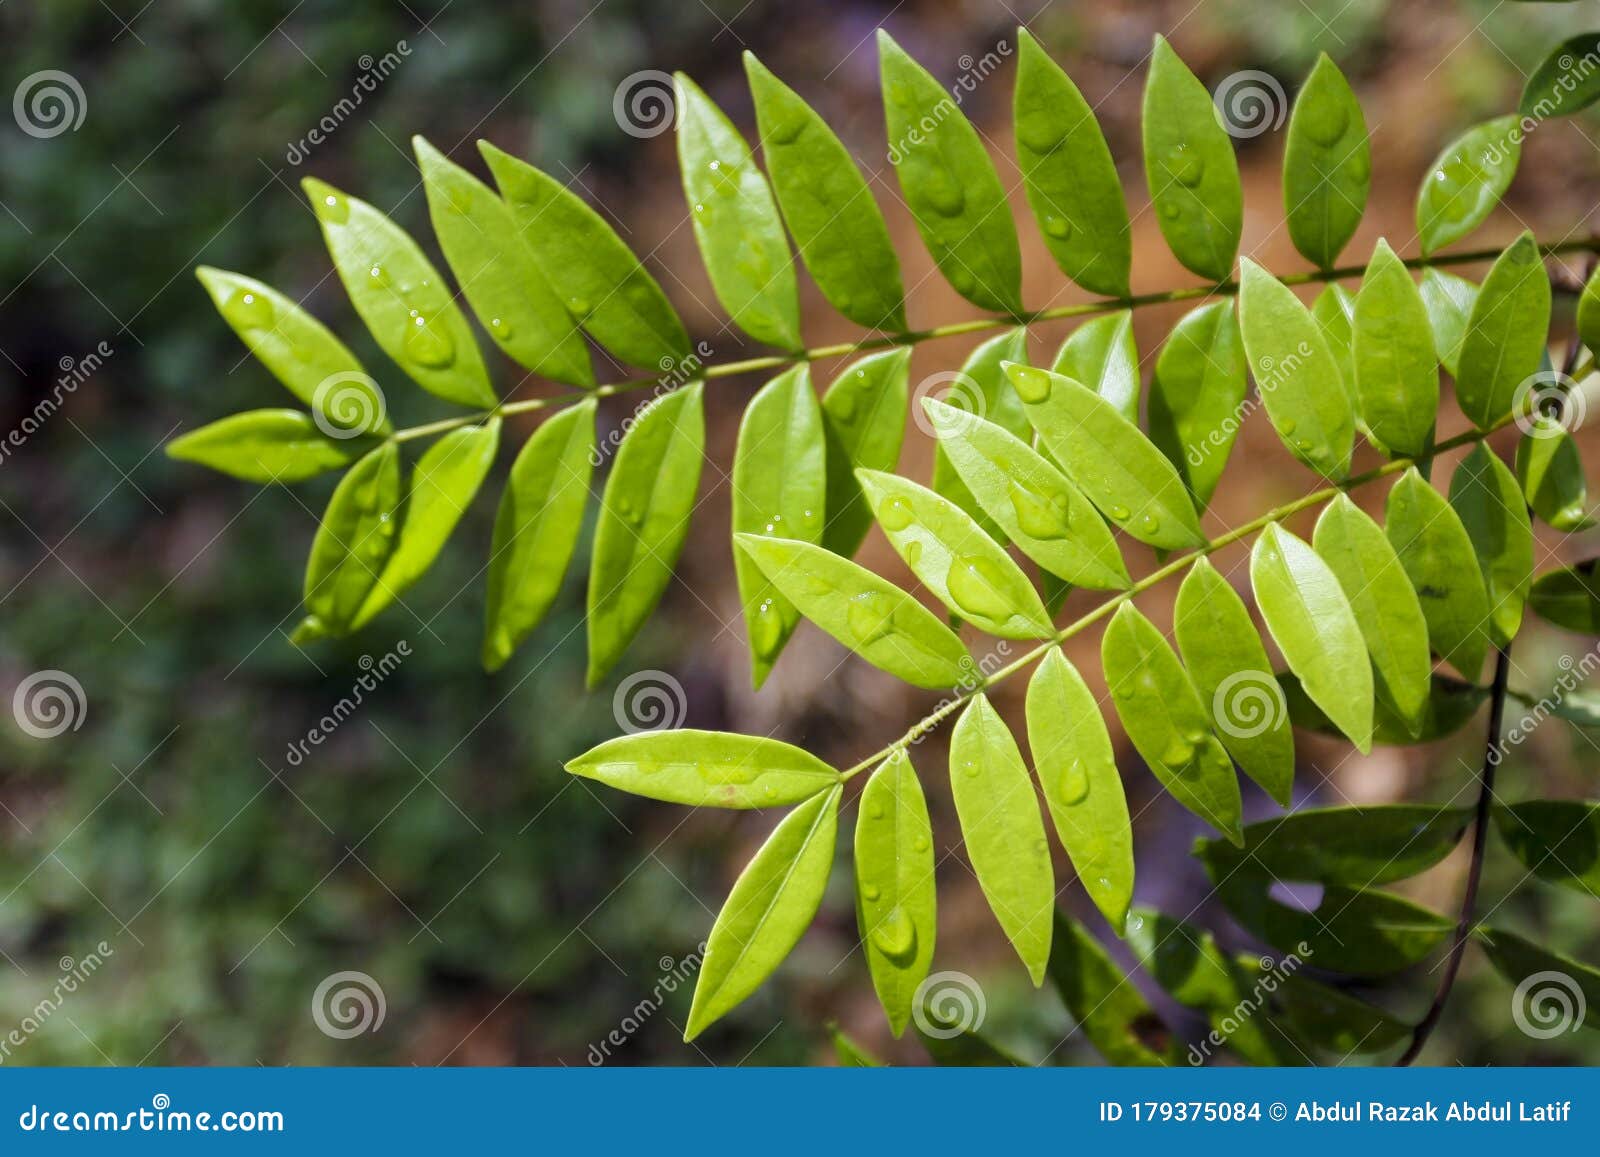 eurycoma longifolia jack commonly known as tongkat ali